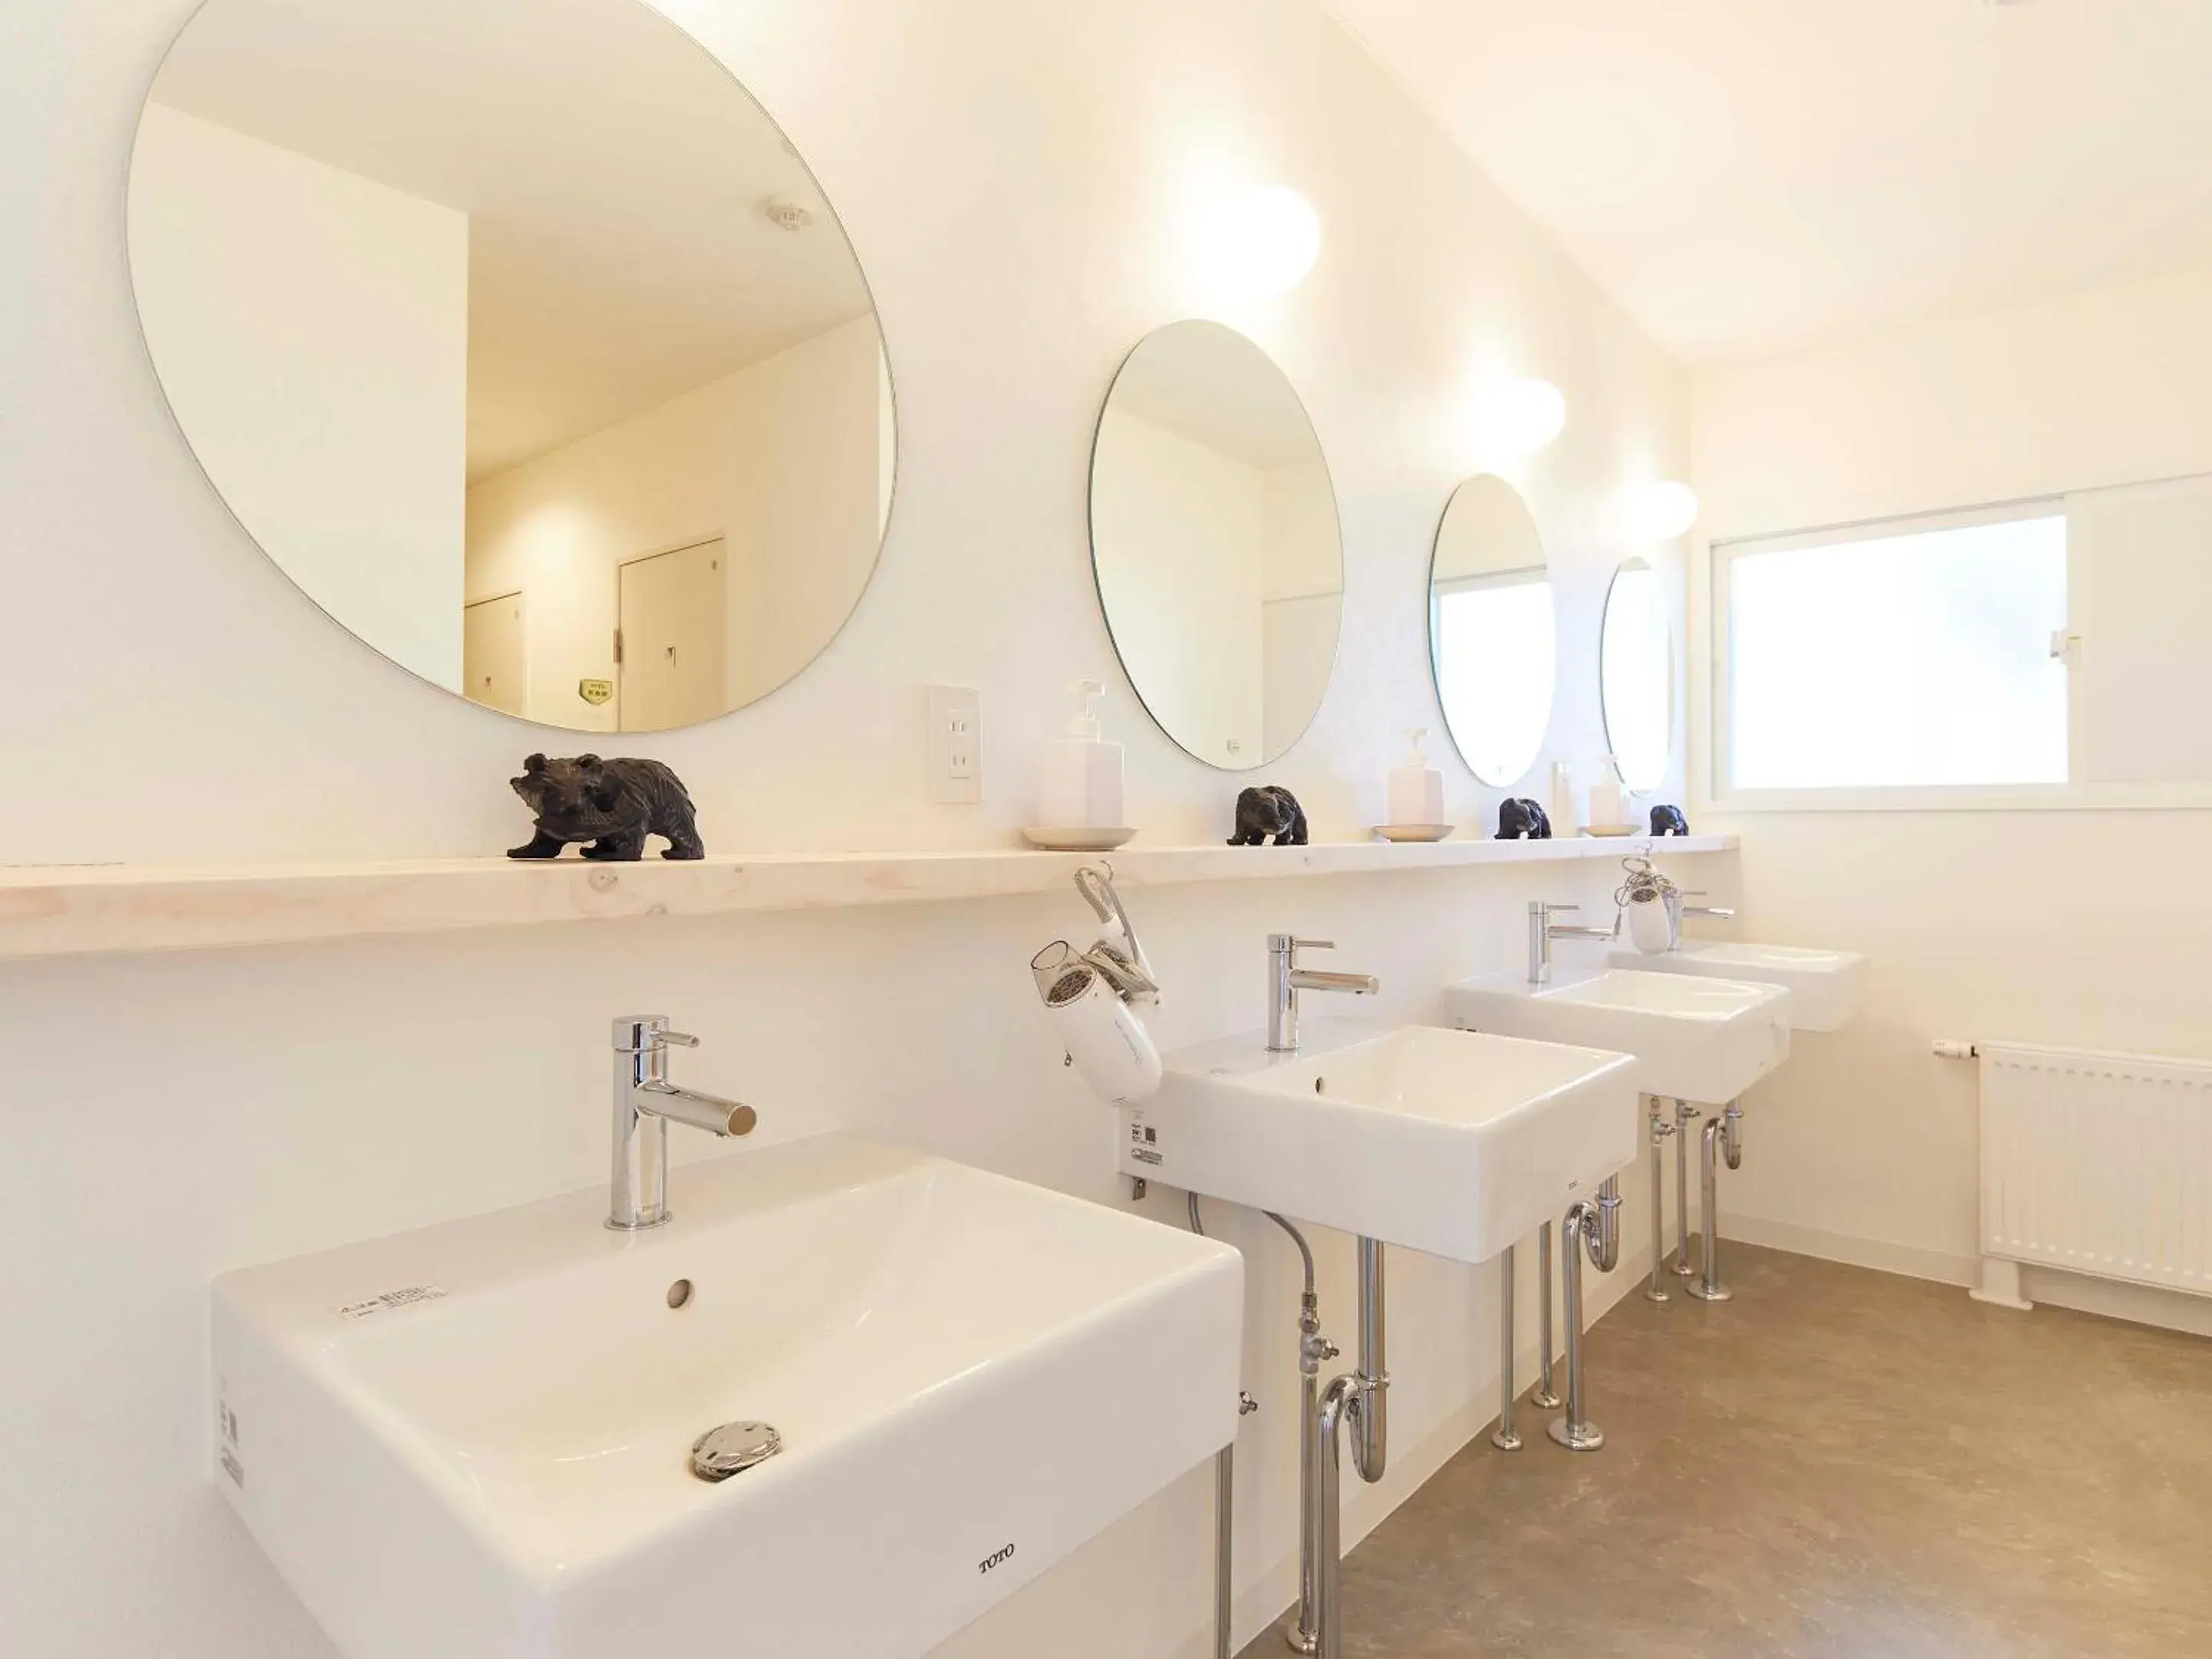 Area and facilities, Bathroom in haku hostel